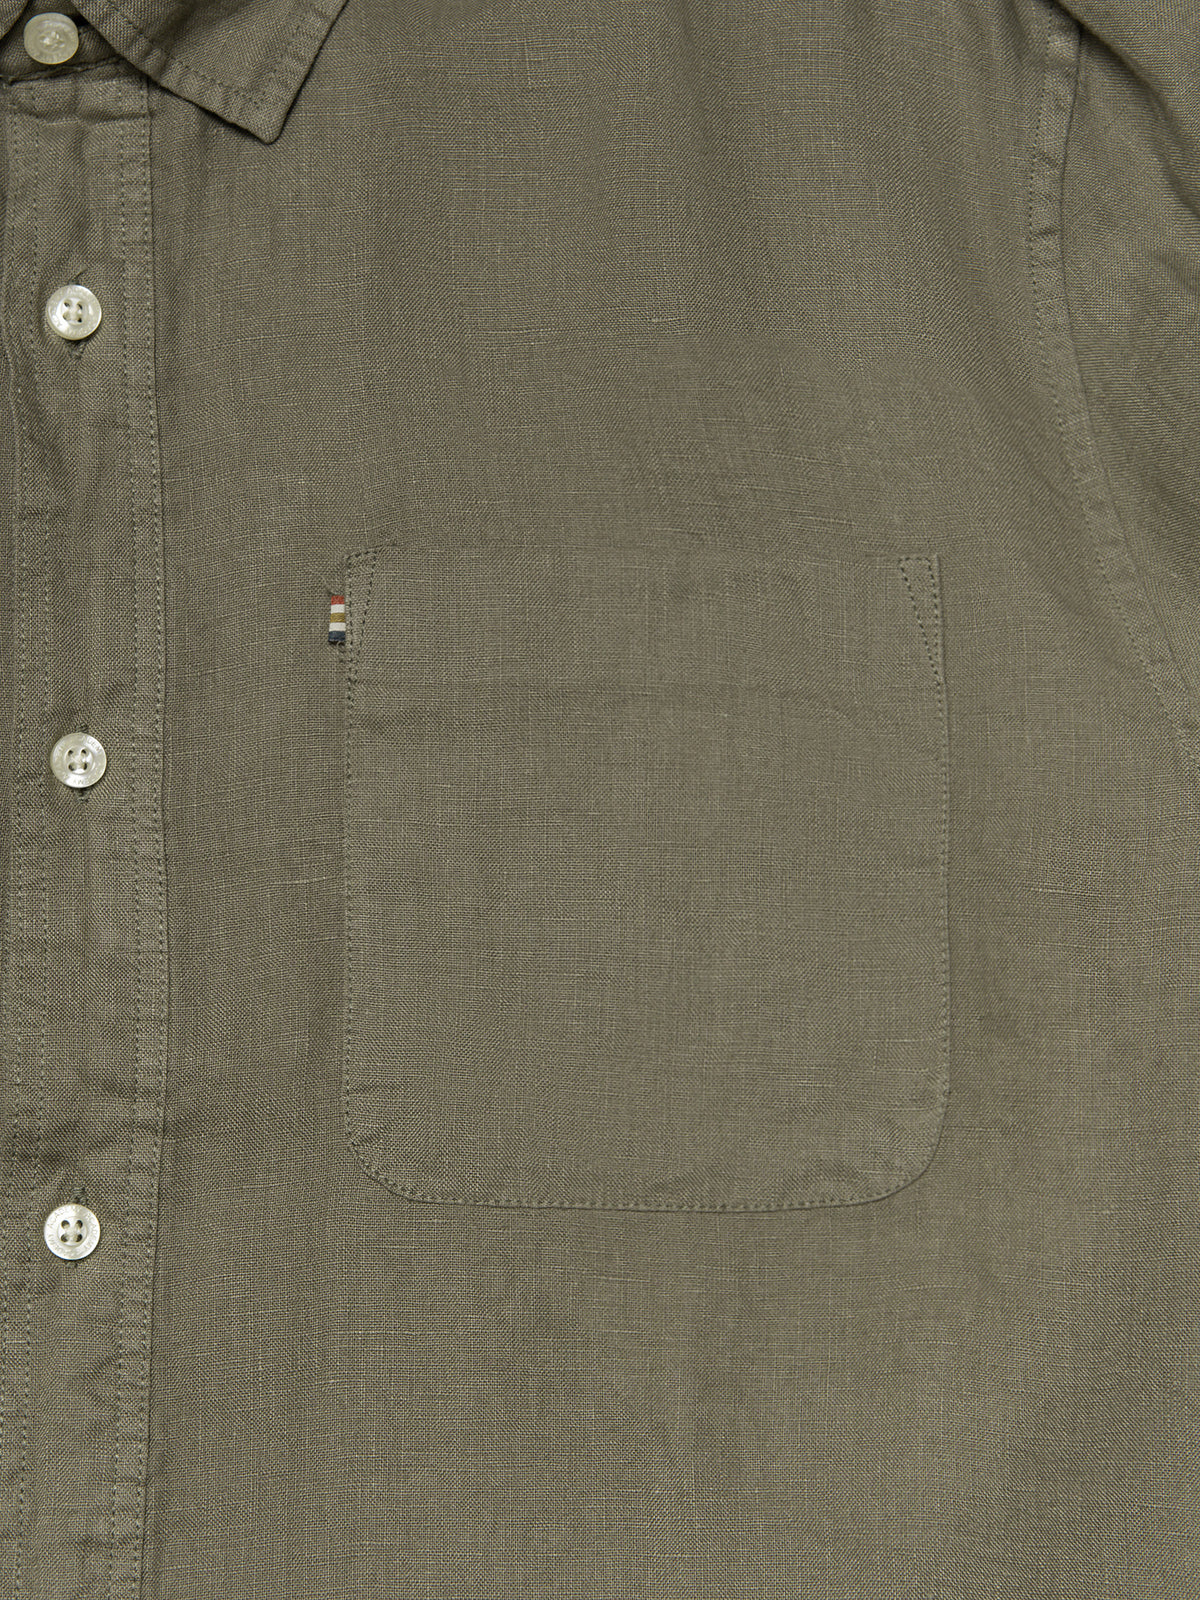 Hampton Linen Long Sleeve Shirt Olive